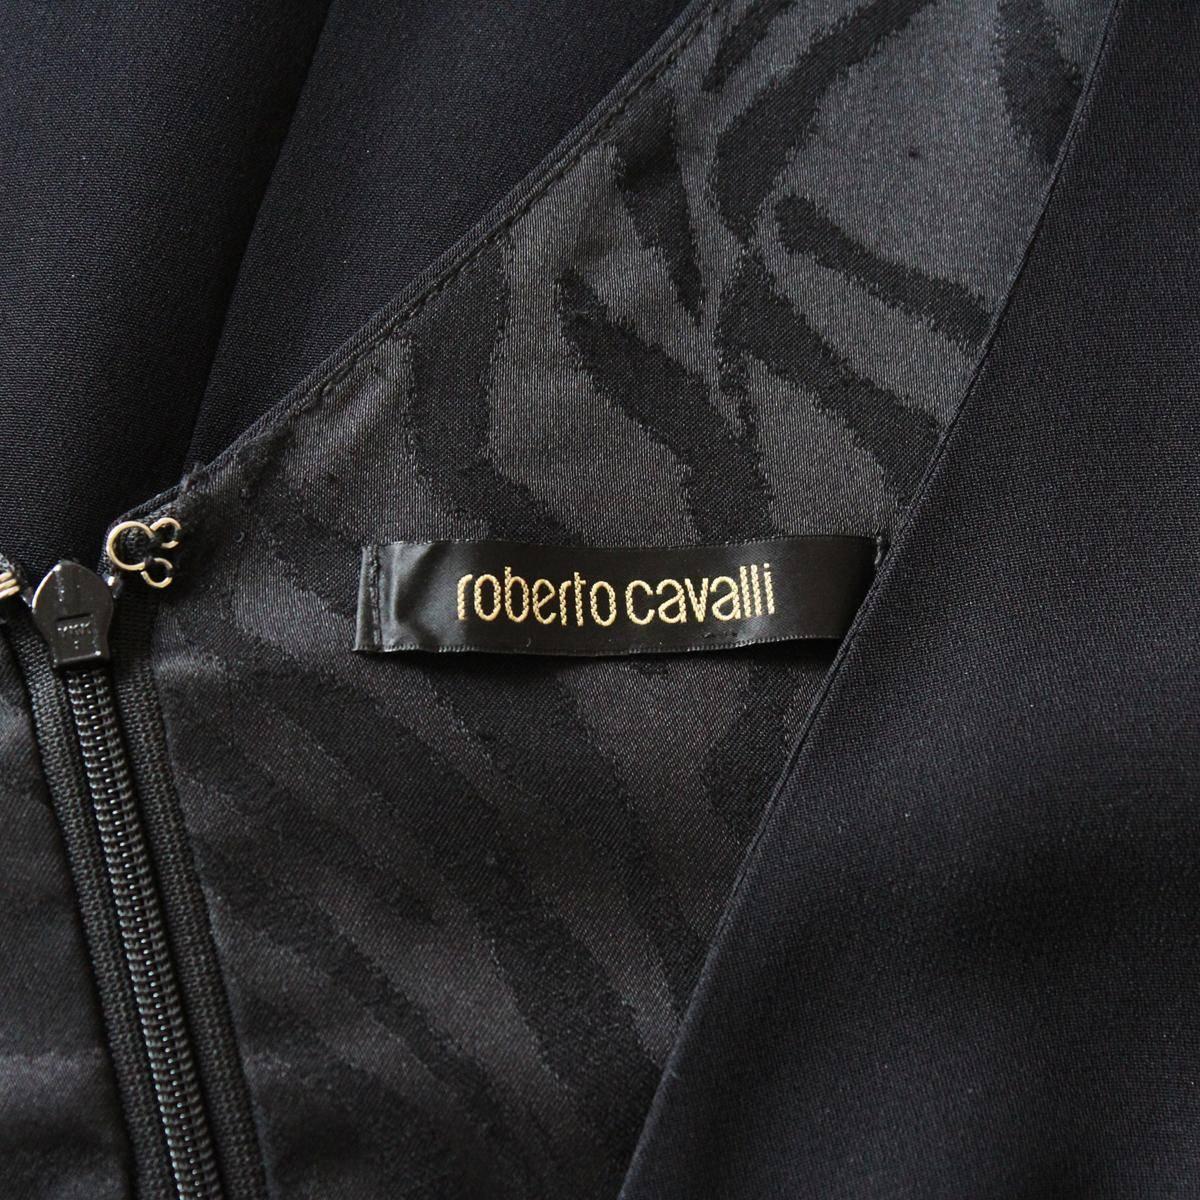 Roberto Cavalli Black Jewel Dress IT 40 1